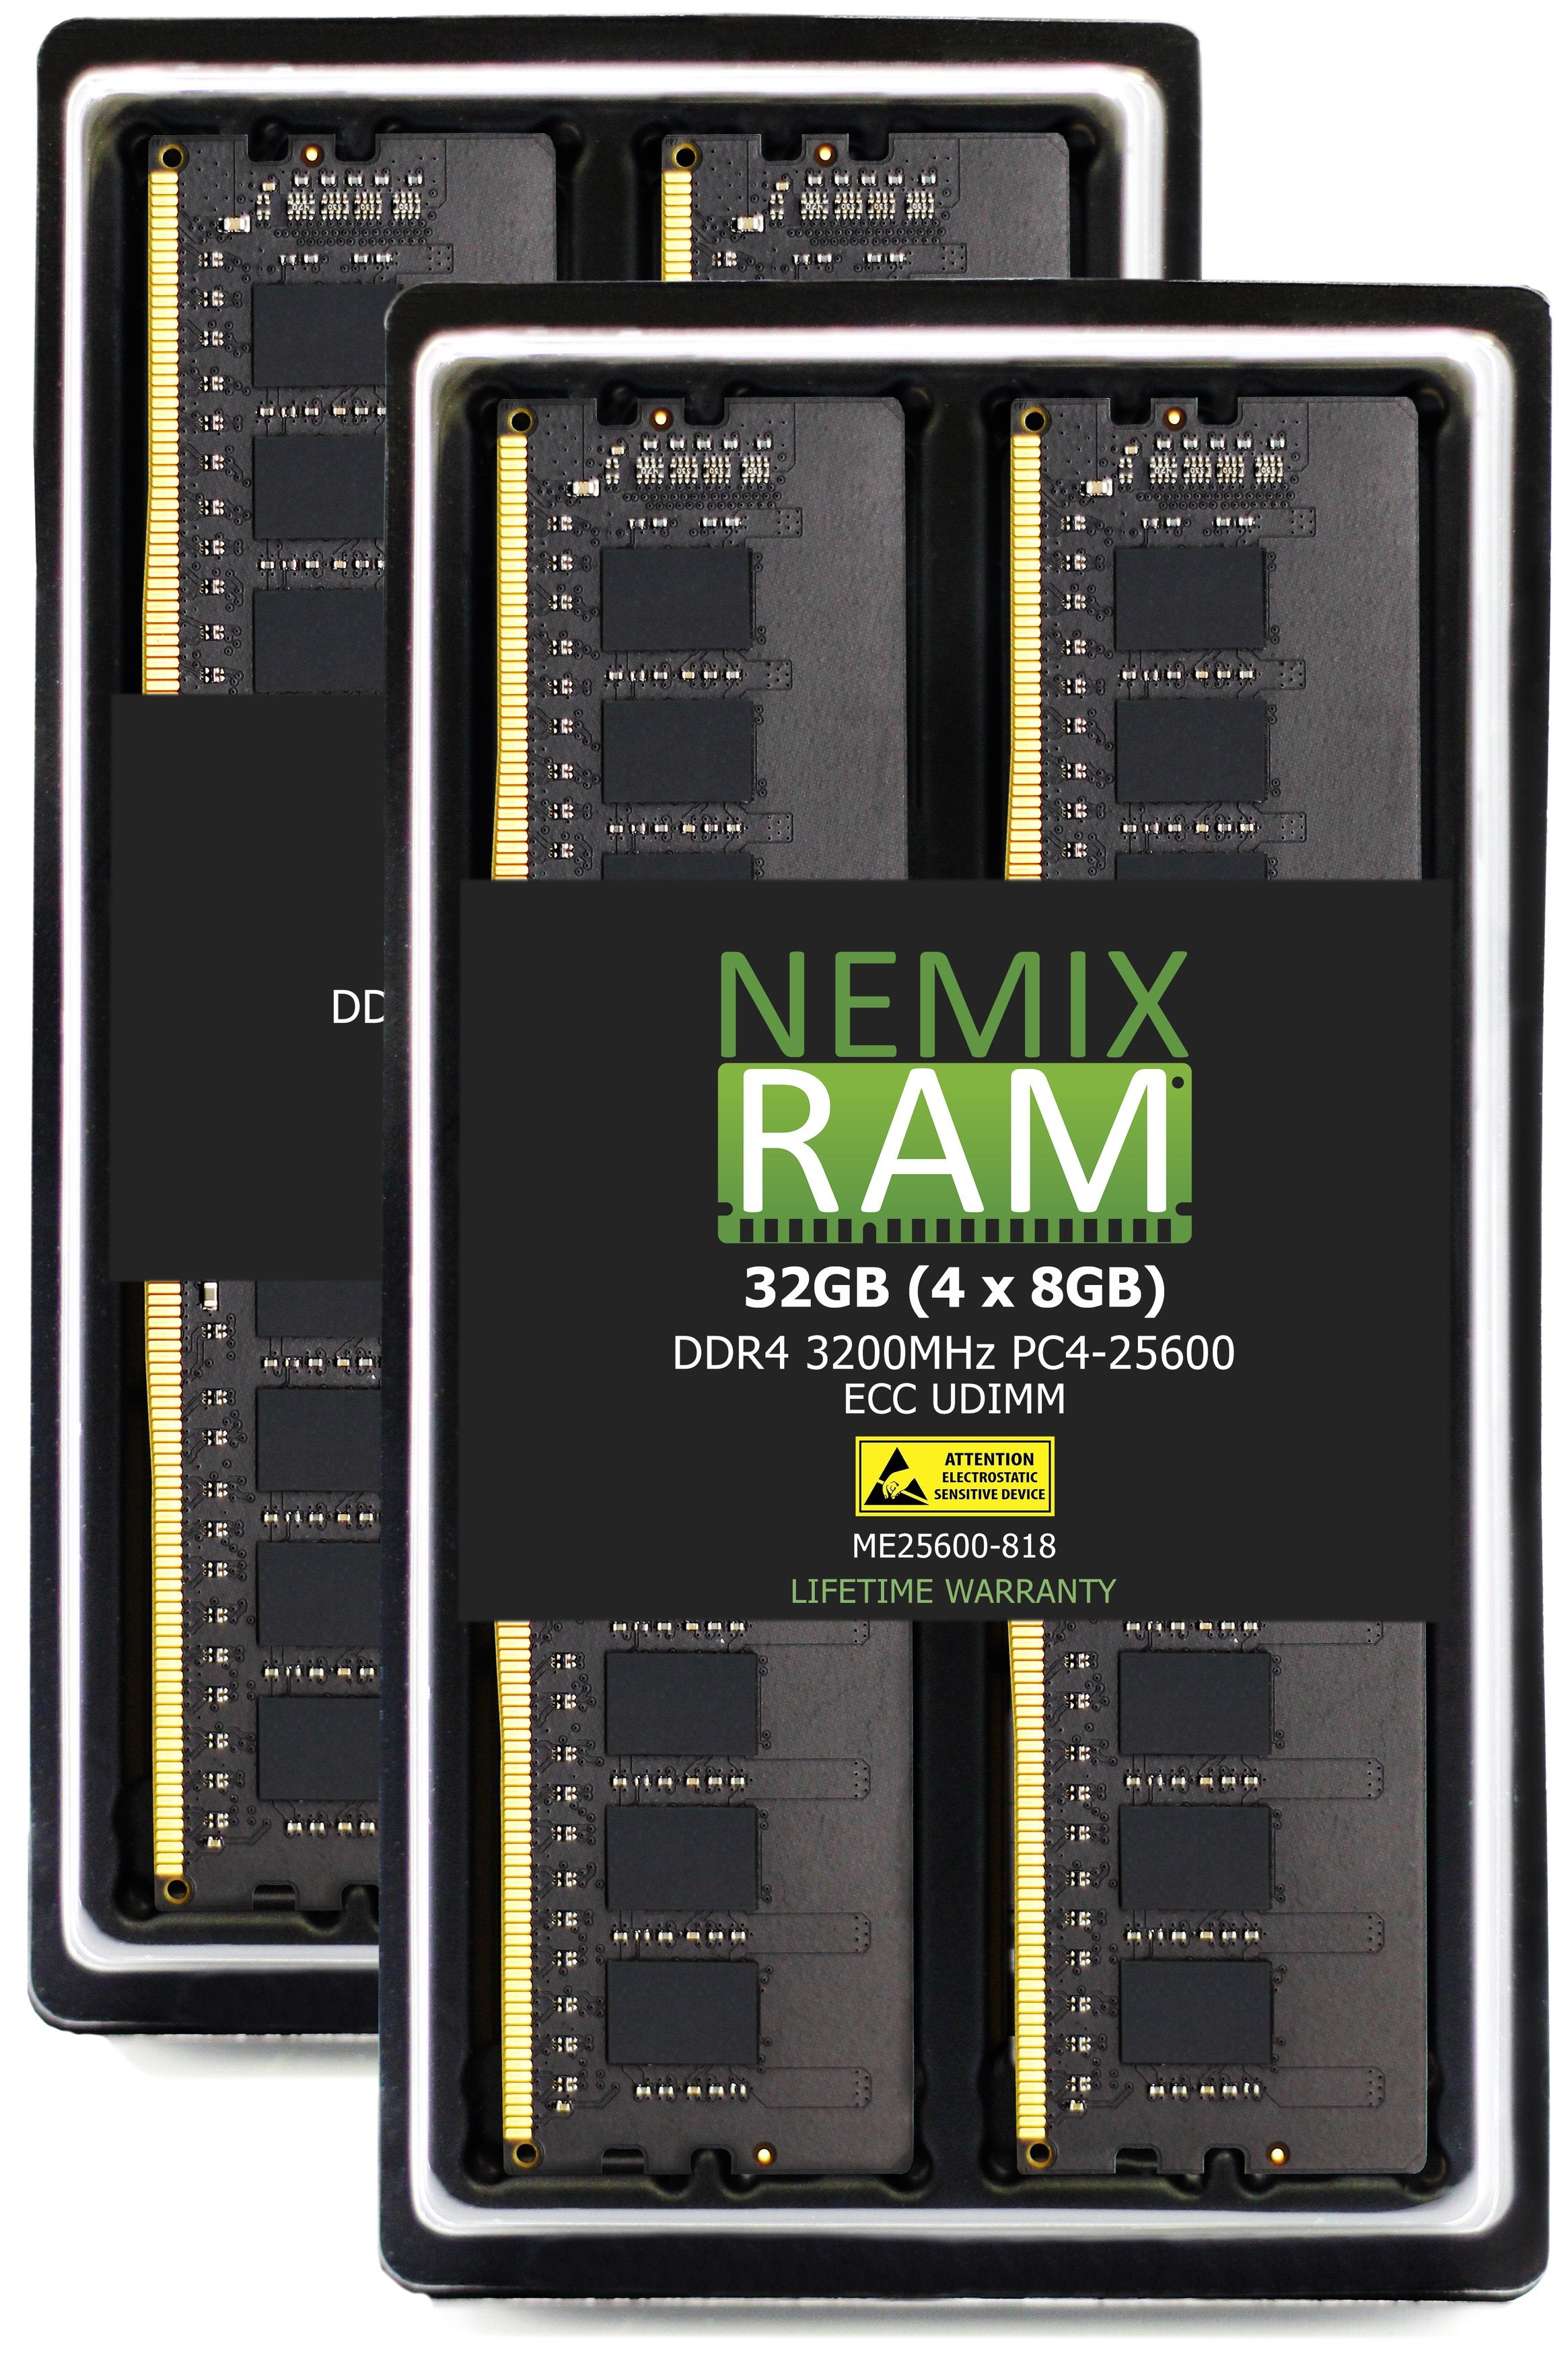 DDR4 3200MHZ PC4-25600 ECC UDIMM for ASUS ROG Crosshair VIII Hero AMD X570 ATX